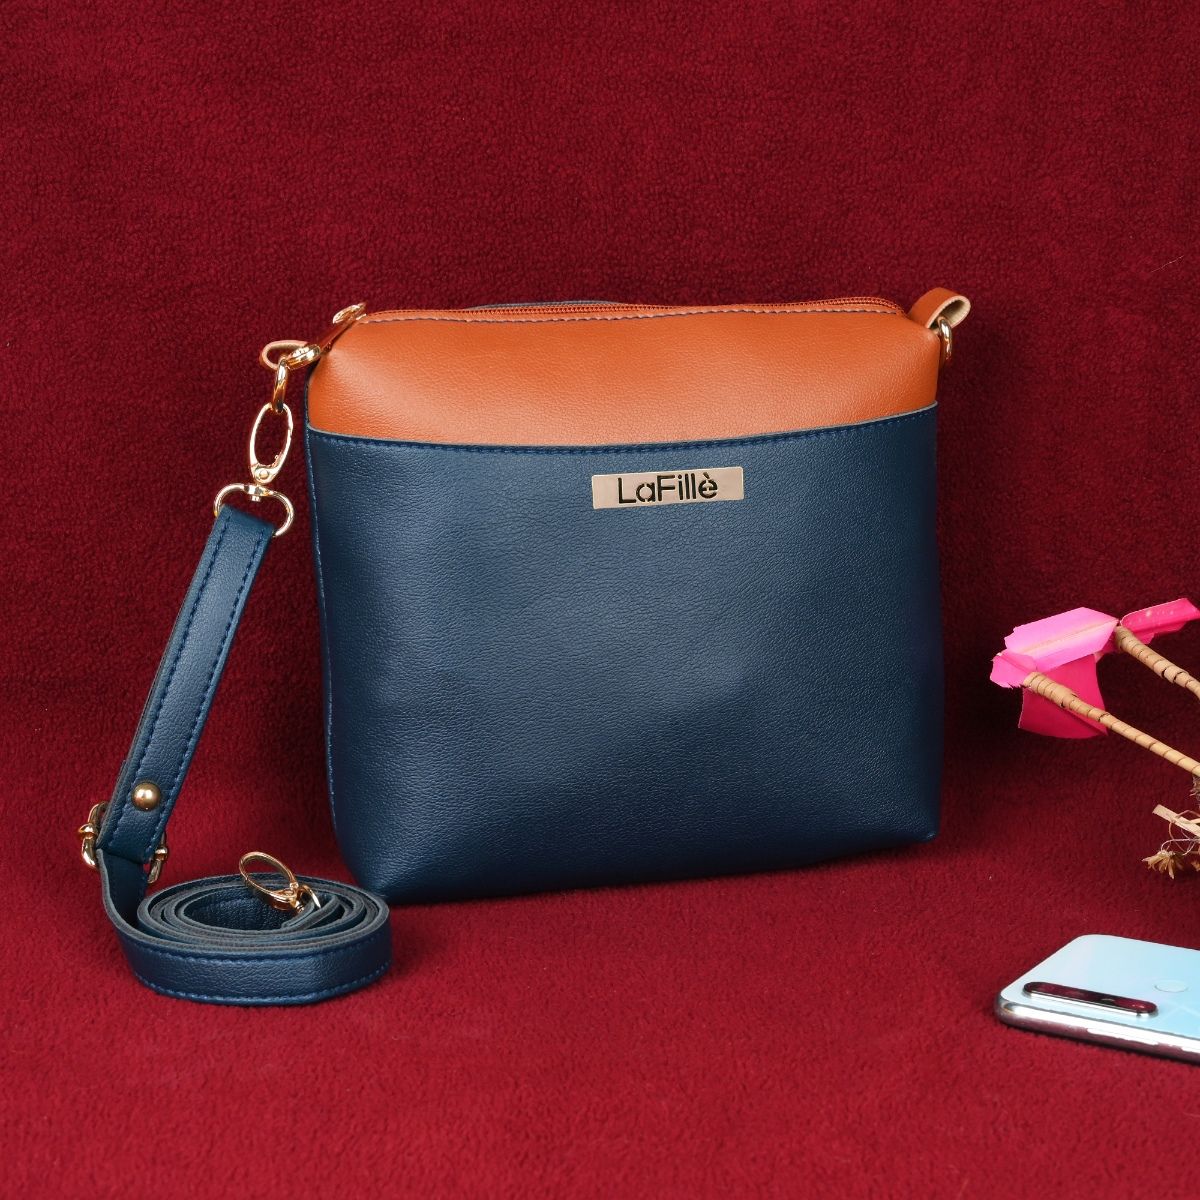 Buy Hidle Berg Women Black Handbag Black Online @ Best Price in India |  Flipkart.com